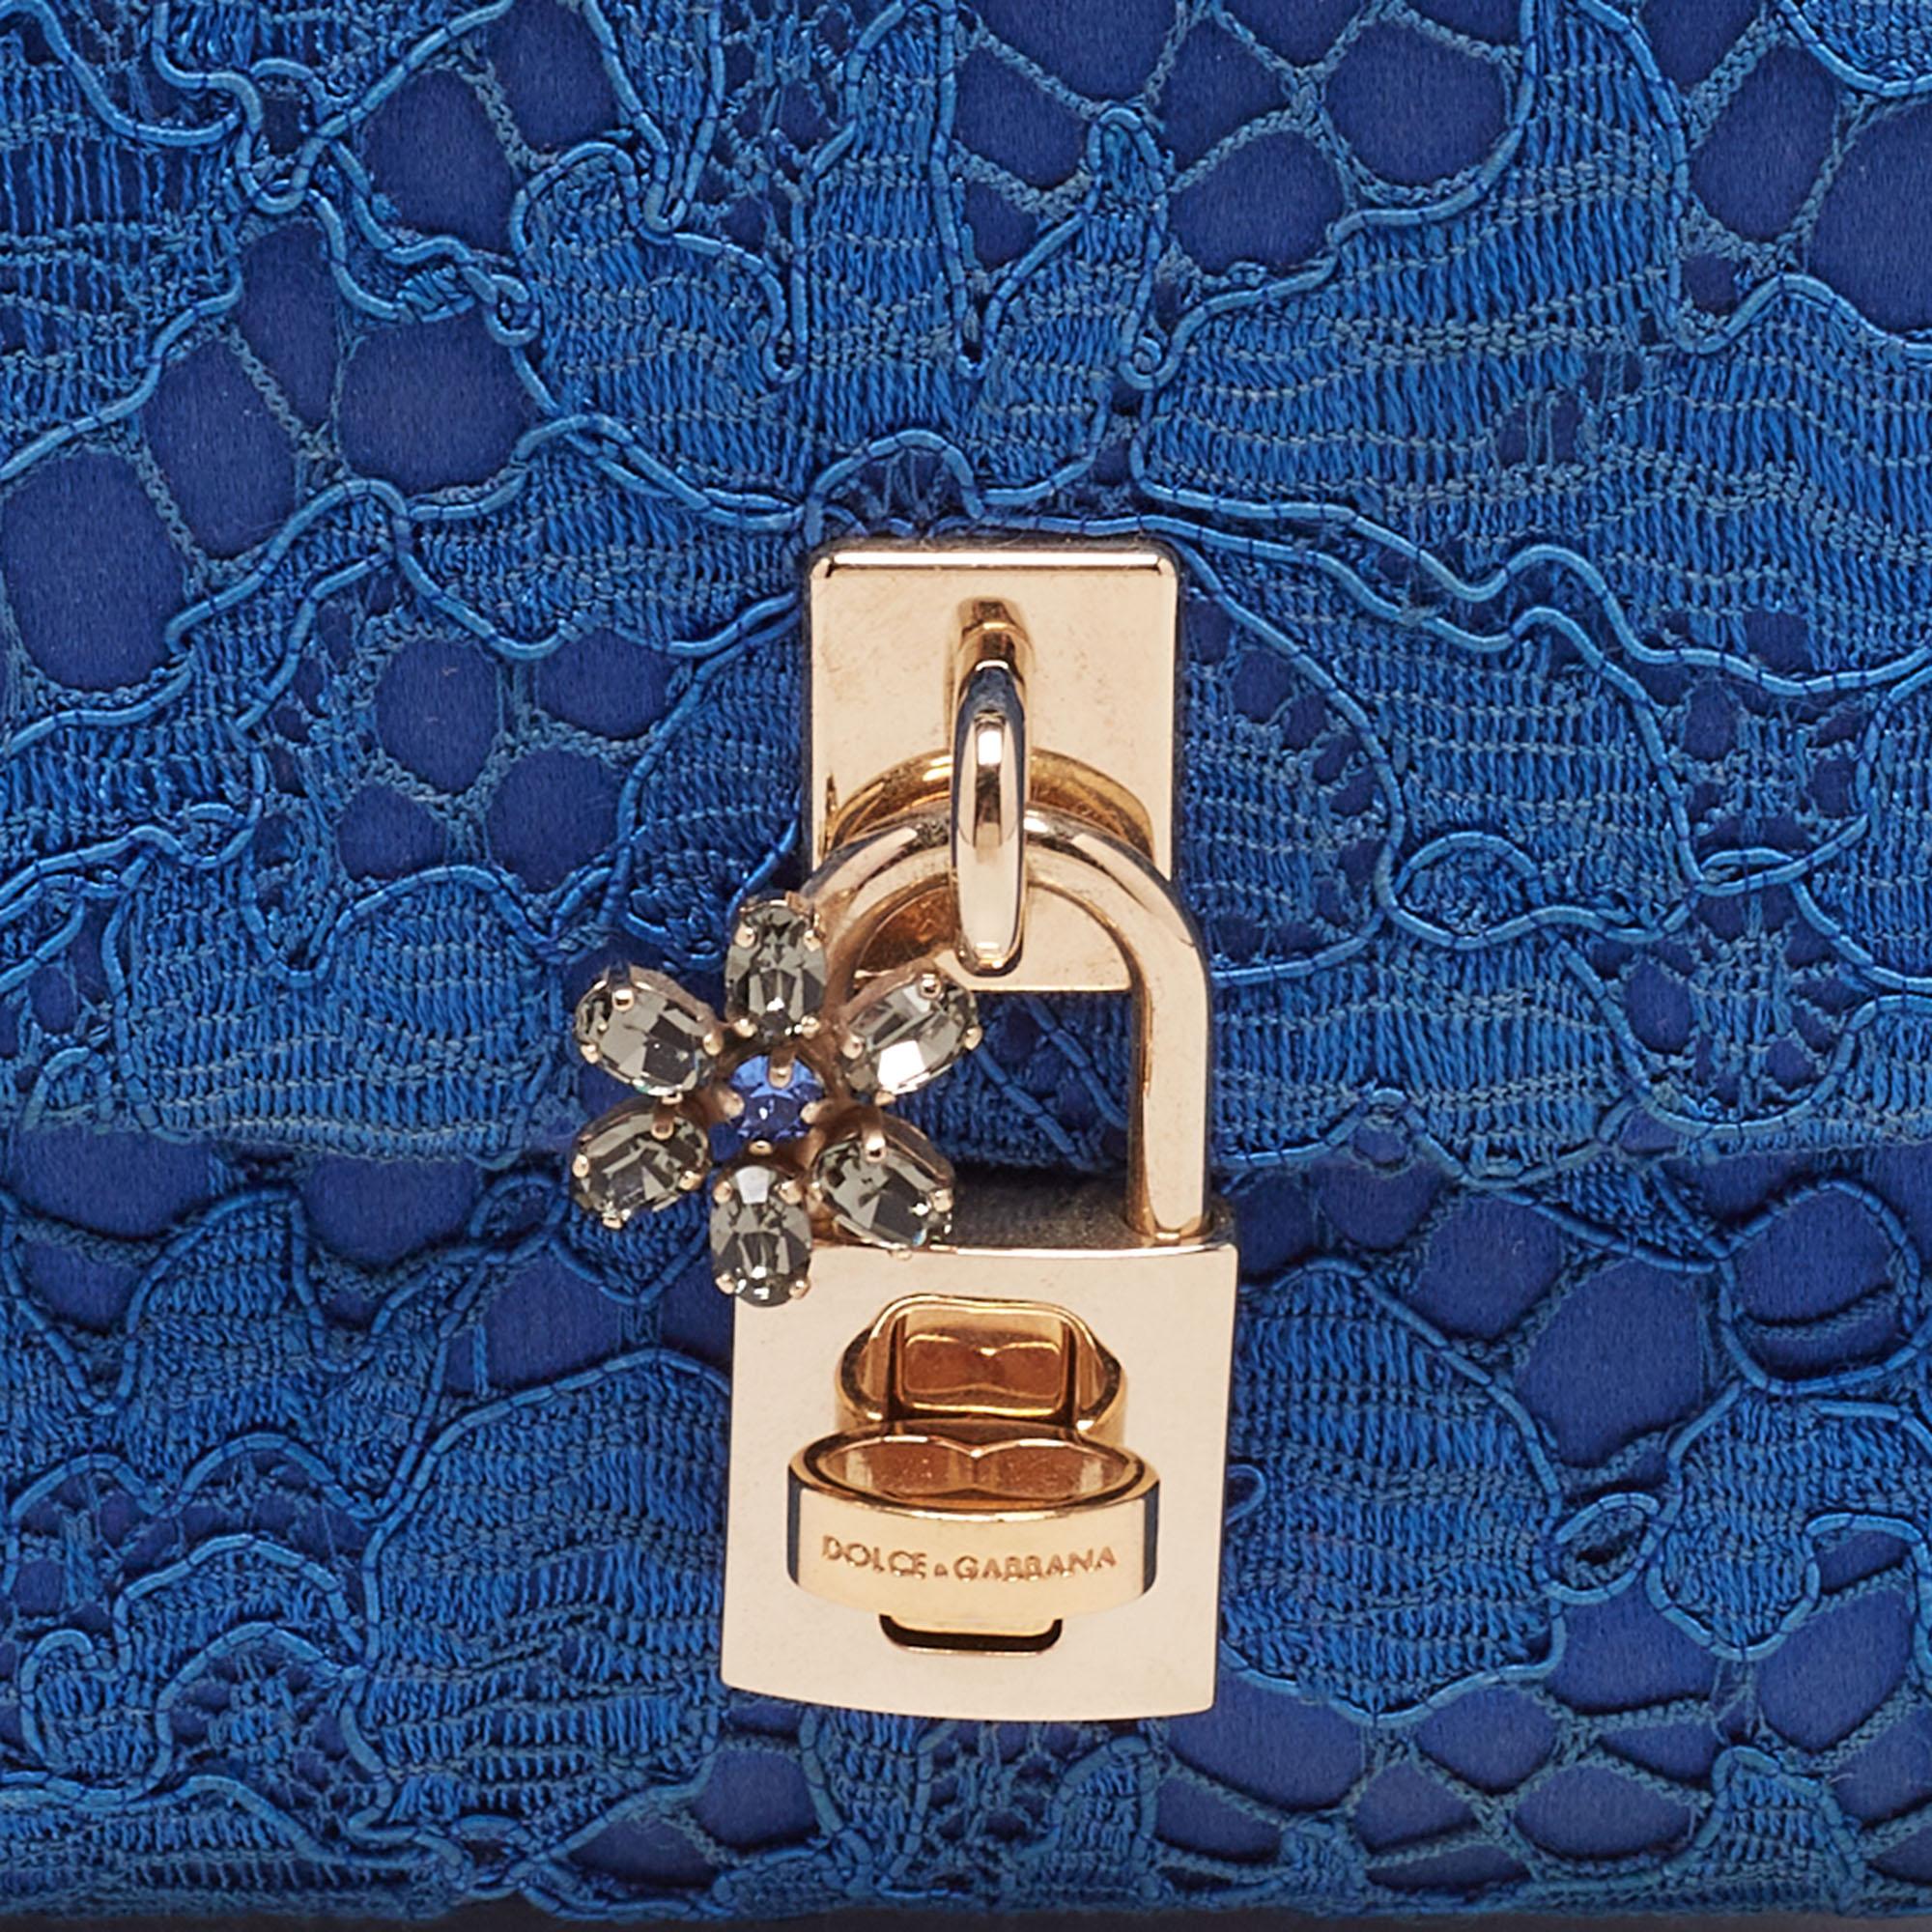 Dolce & Gabbana Royal Blue Lace and Satin Padlock Chain Clutch 2